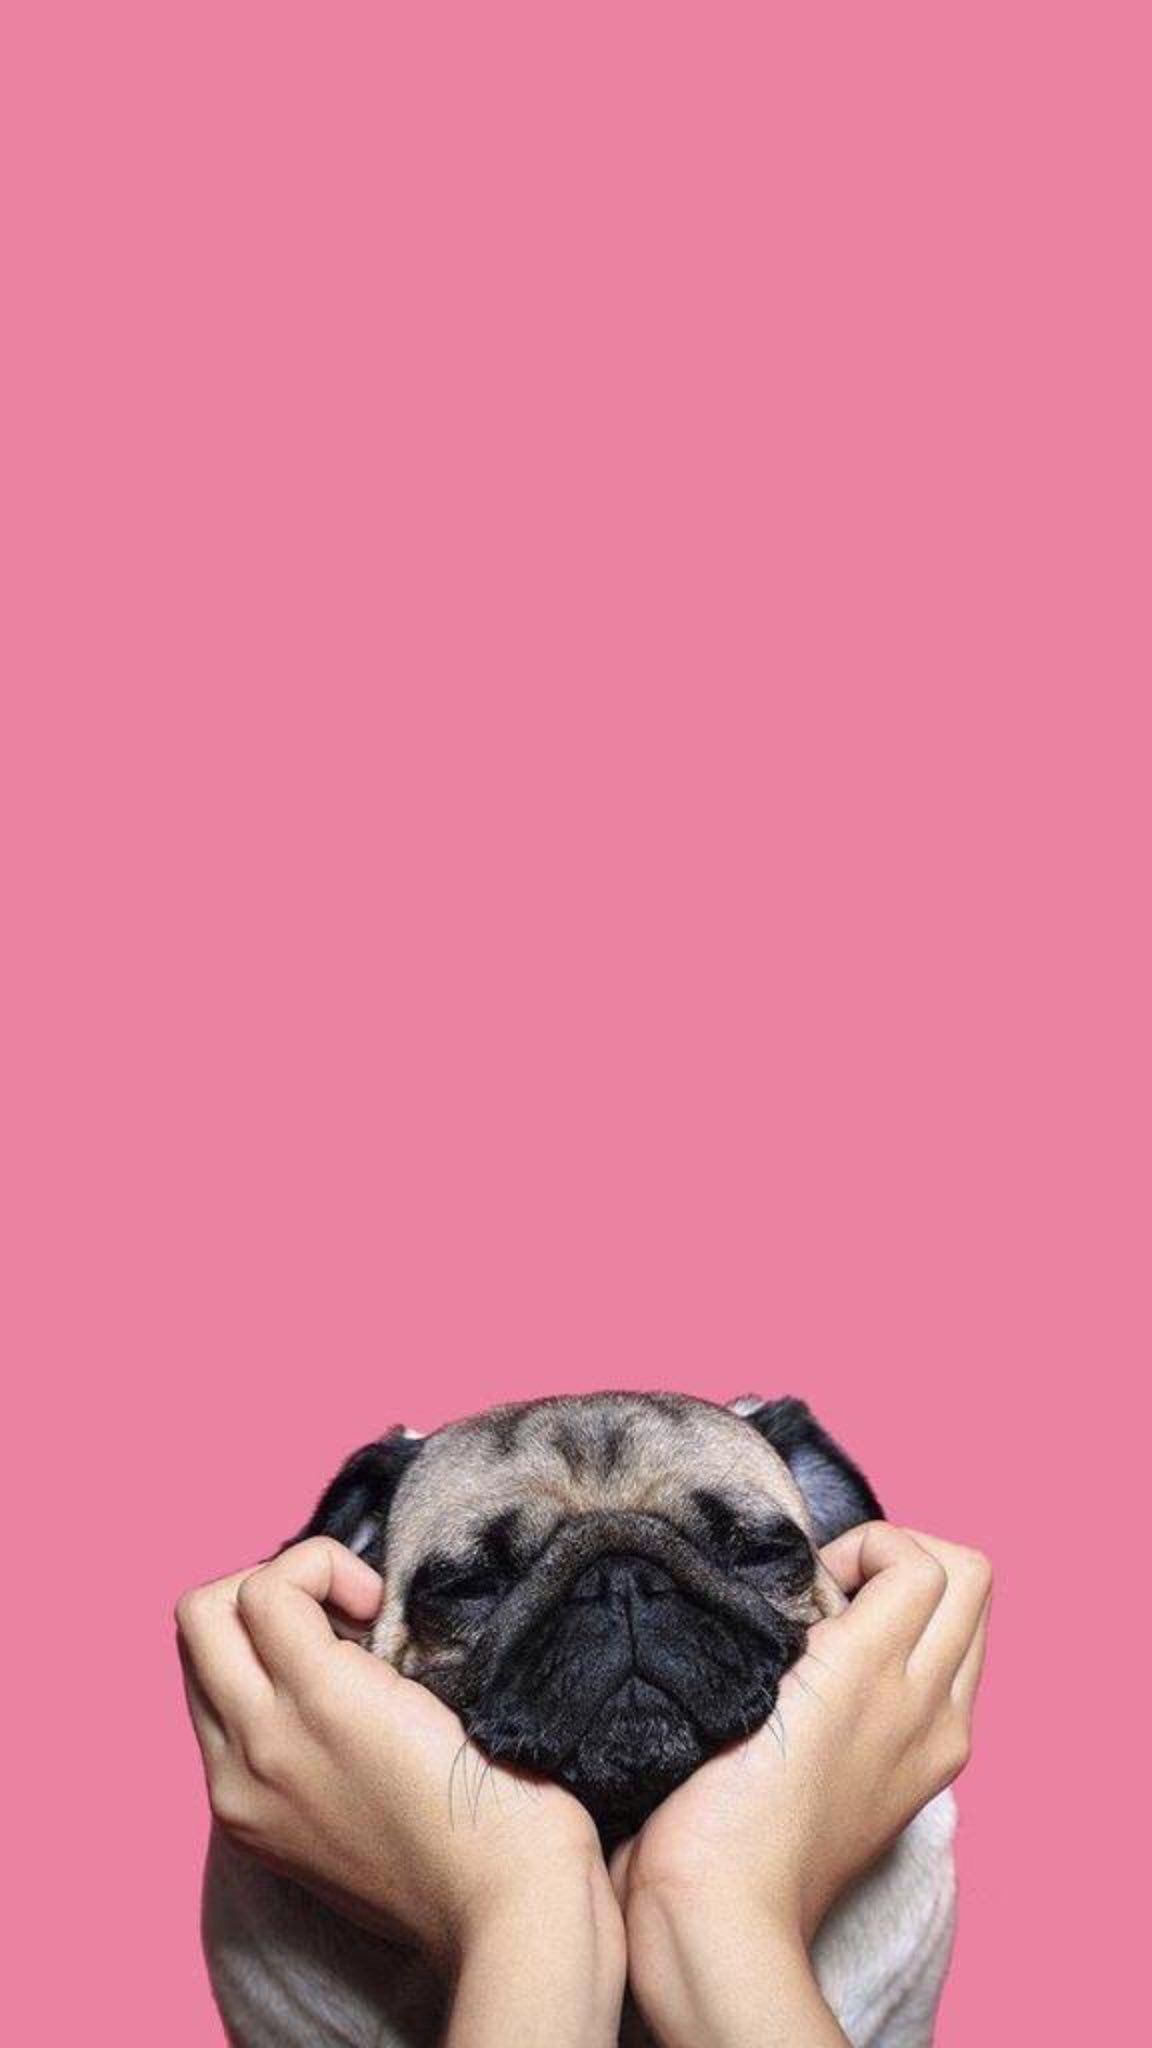 Lock Screen Cute Dog Wallpaper Iphone - HD Wallpaper 